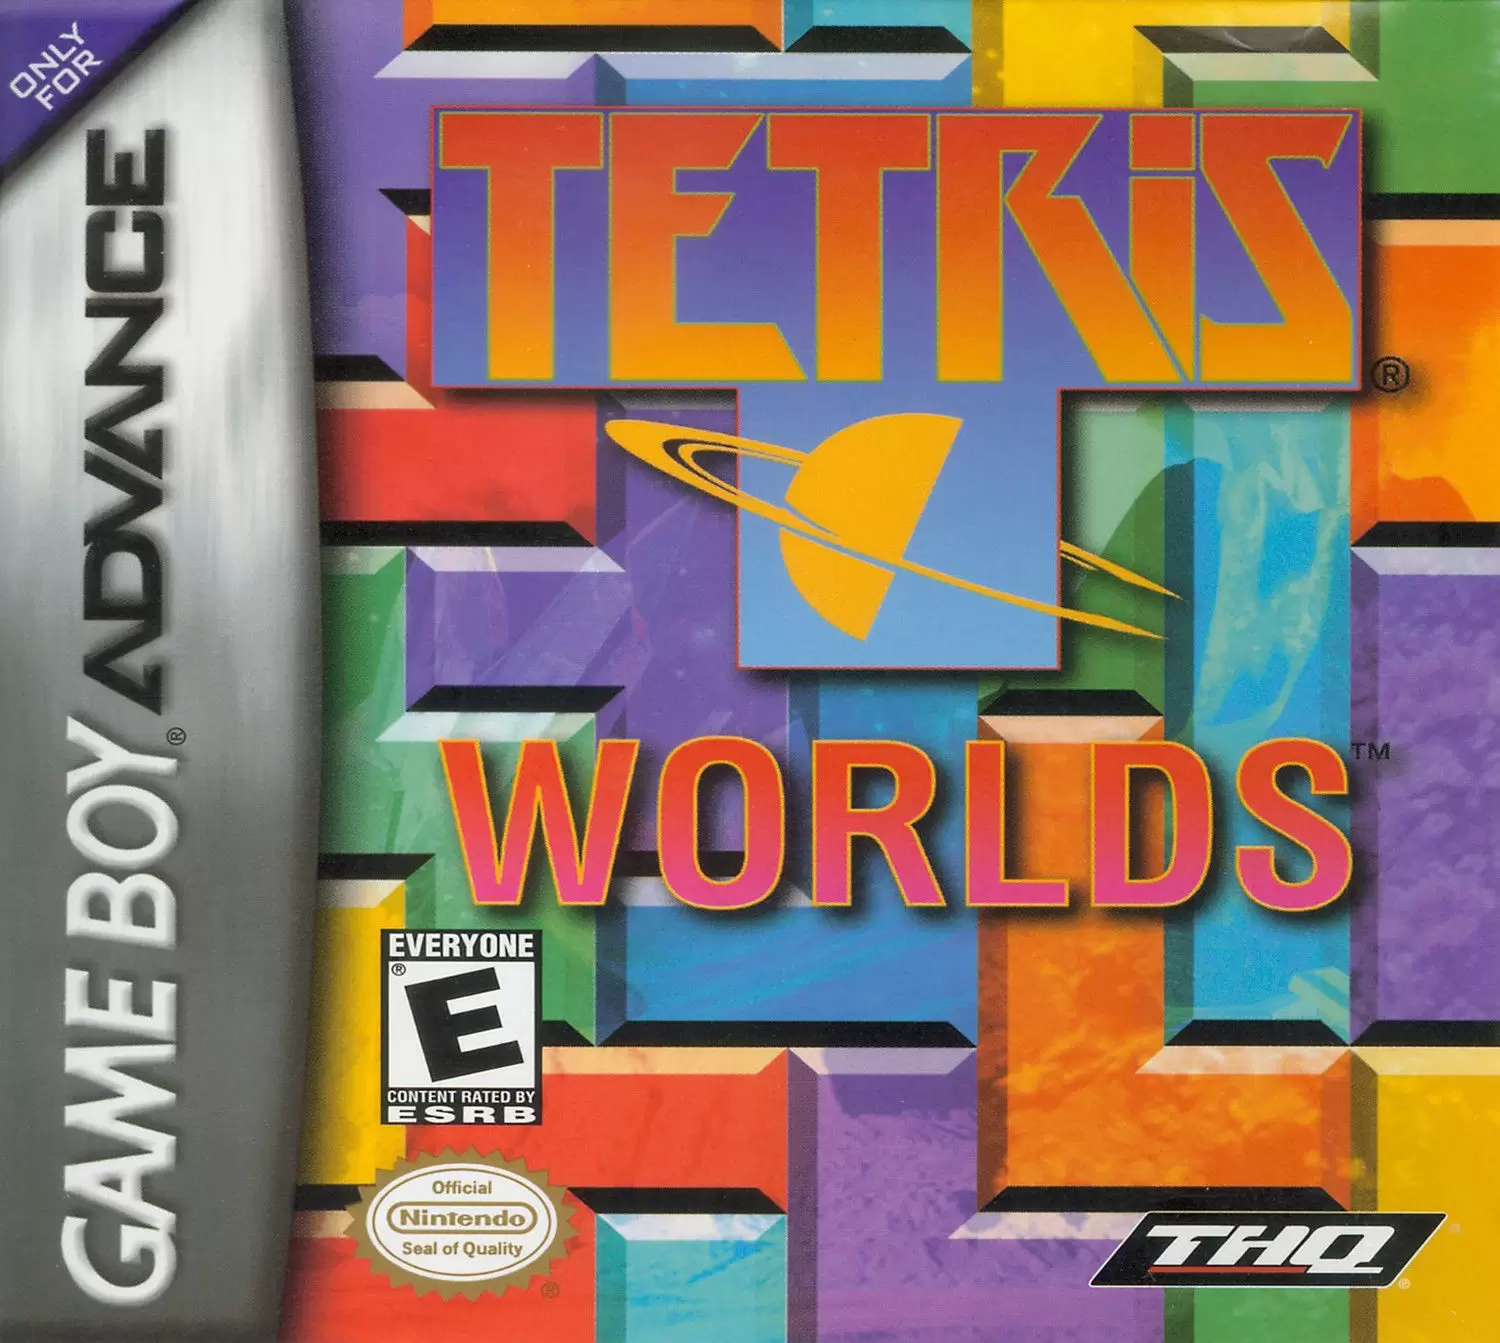 Game Boy Advance Games - Tetris Worlds